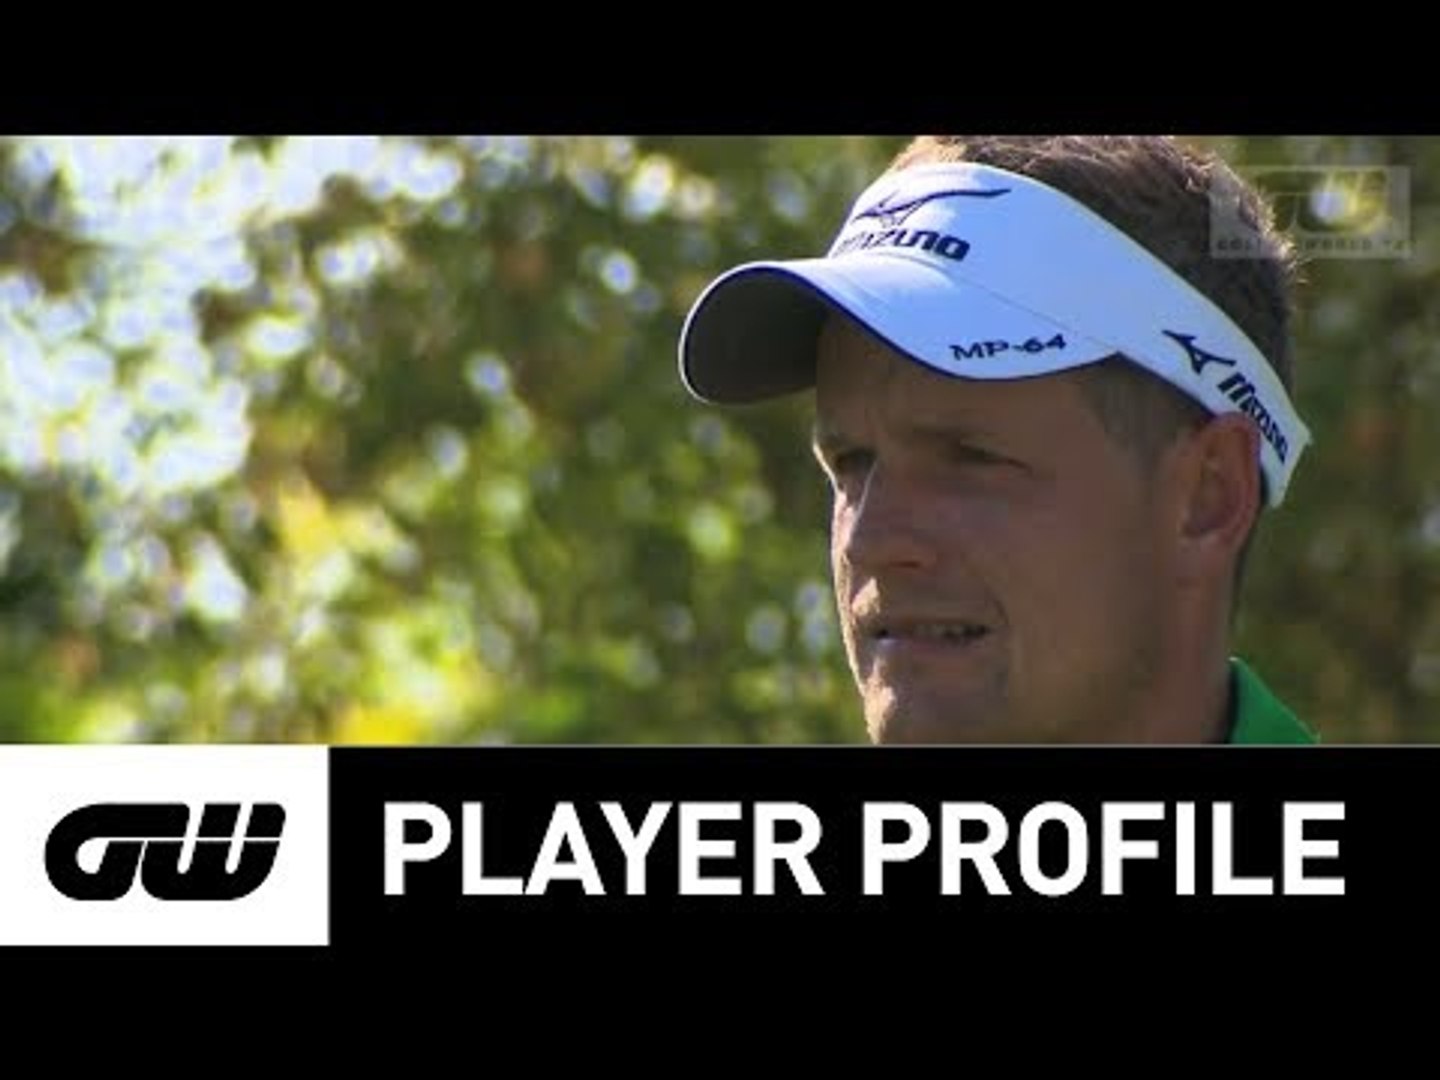 ⁣GW Player Profile: with Luke Donald